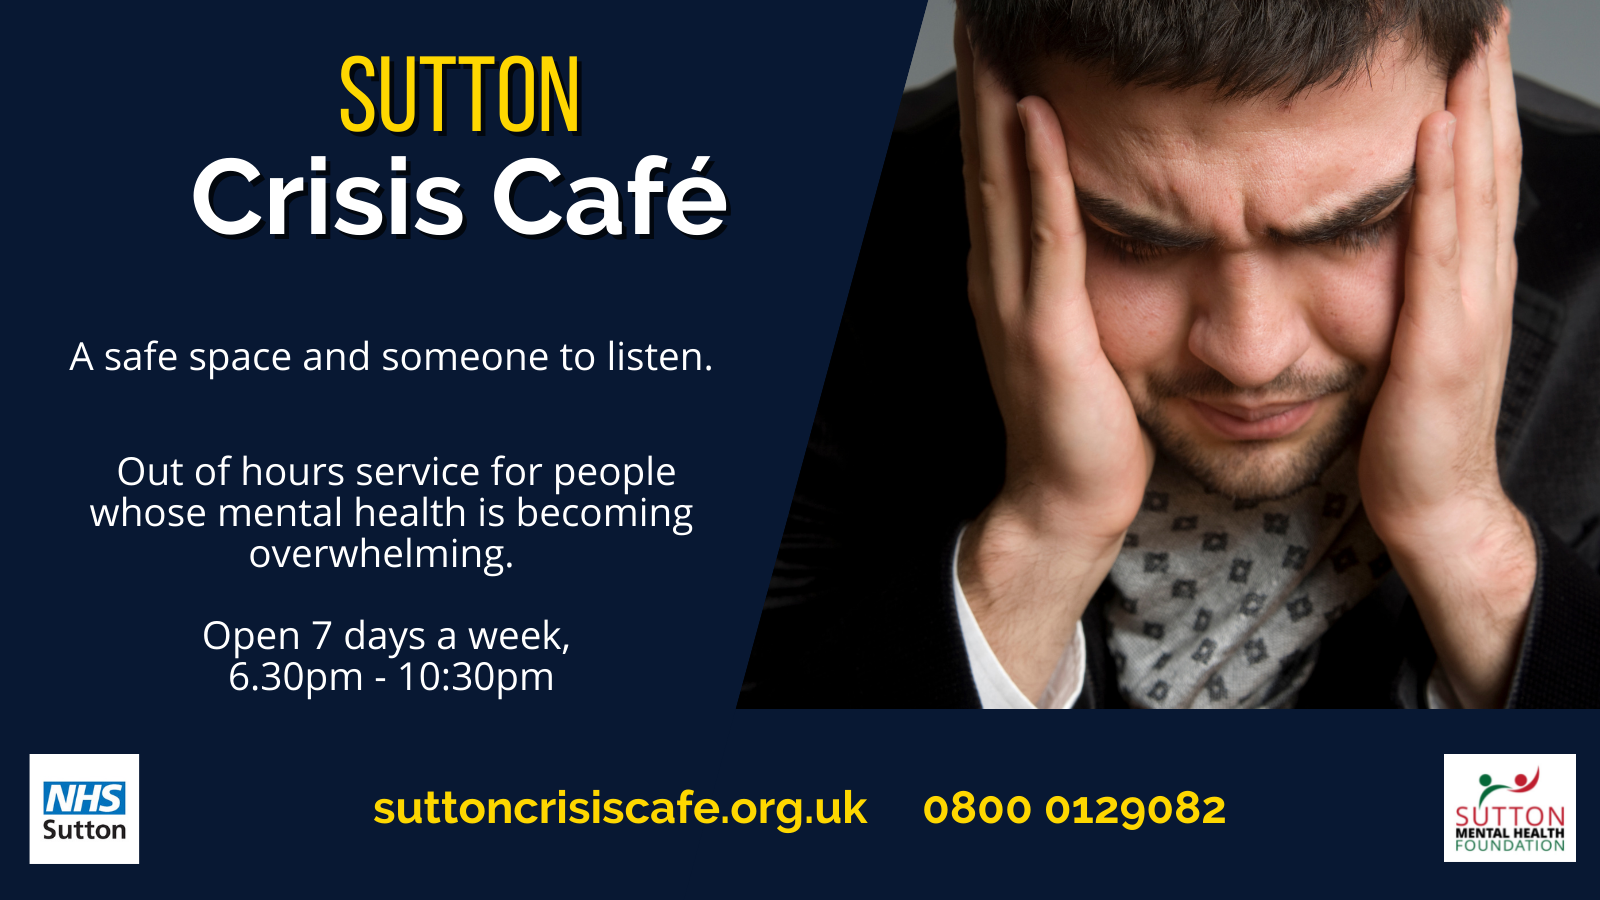 Sutton Crisis Cafe